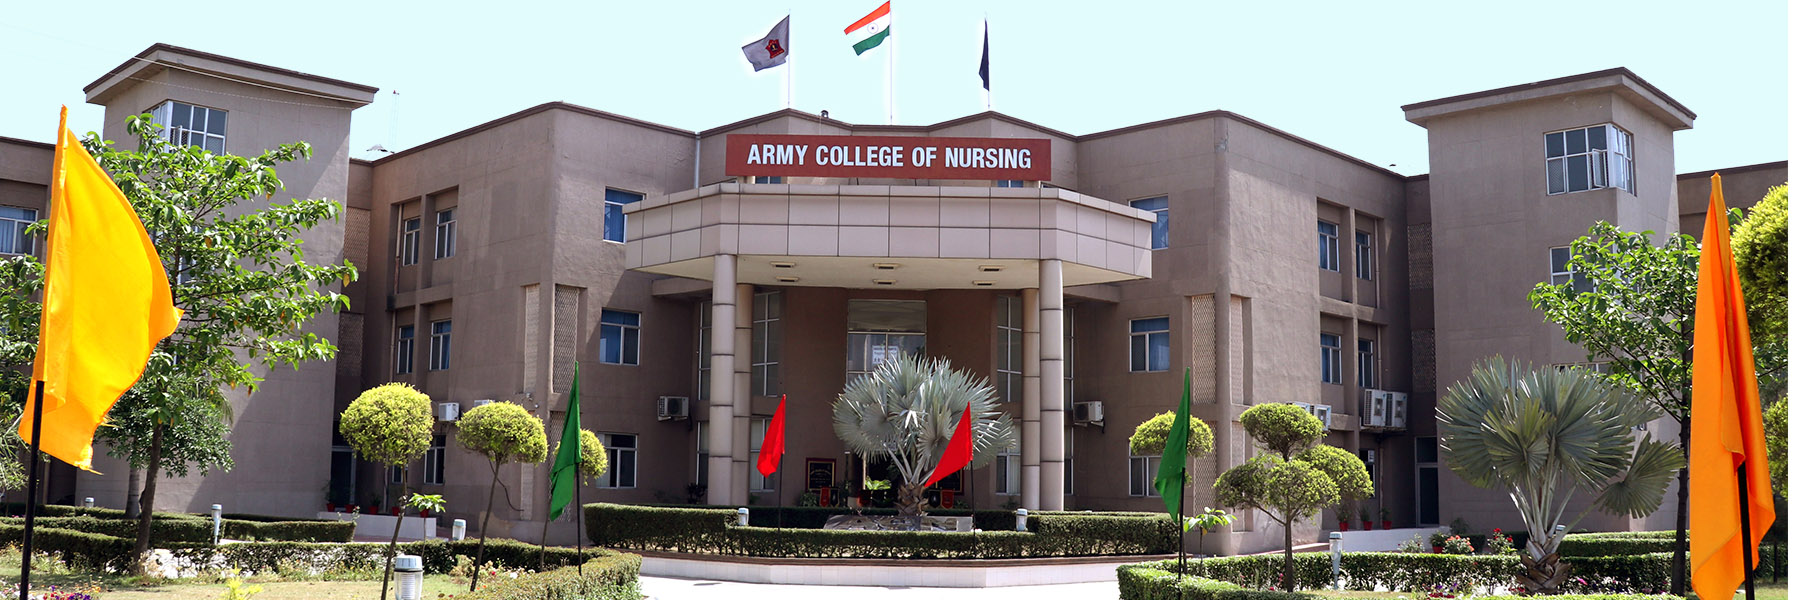 Army College of Nursing, Jalandhar Image